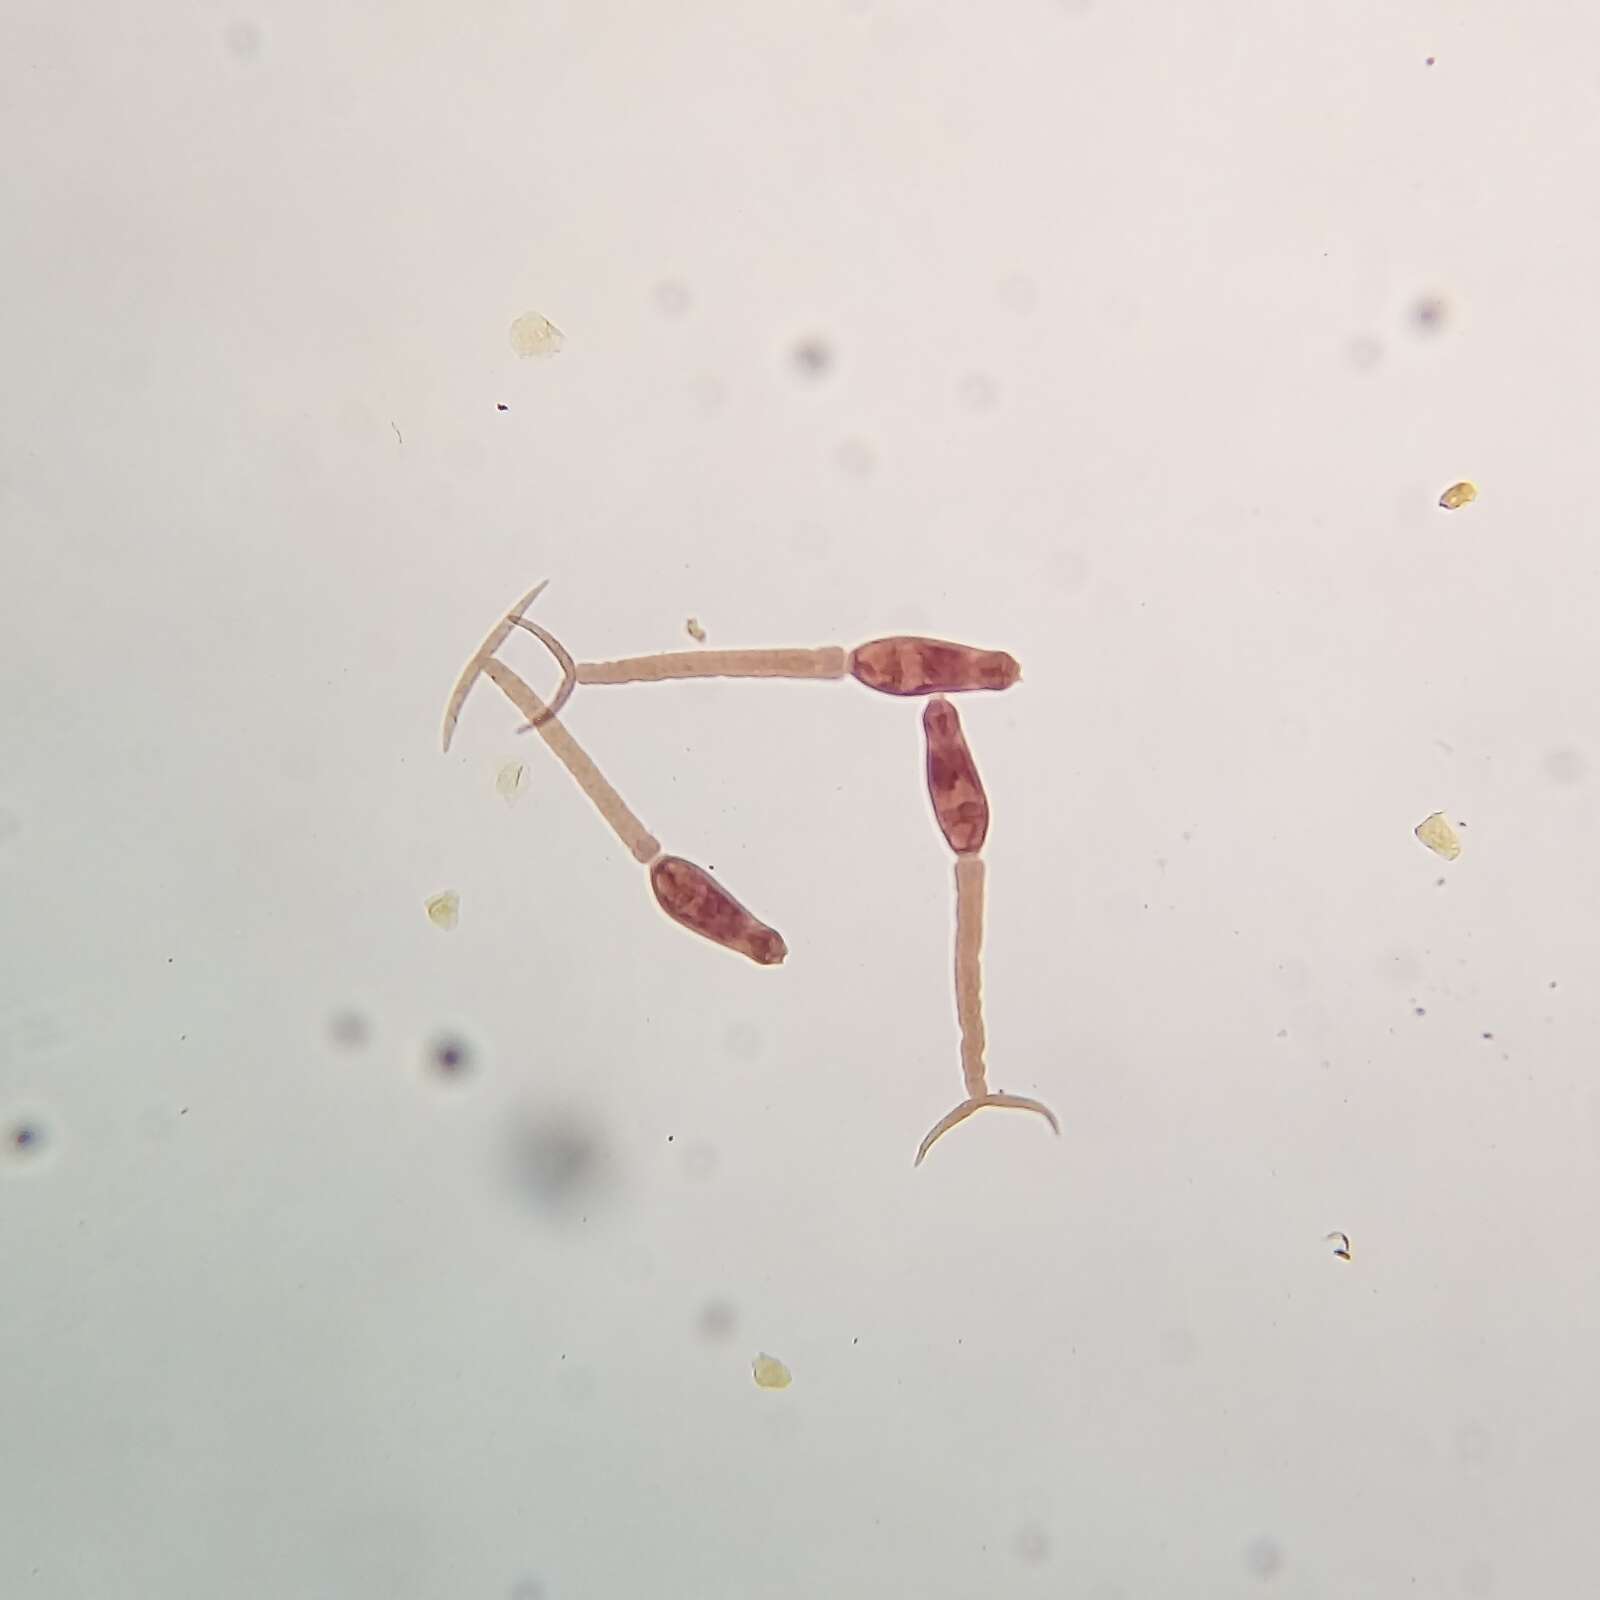 Image of Schistosoma mansoni